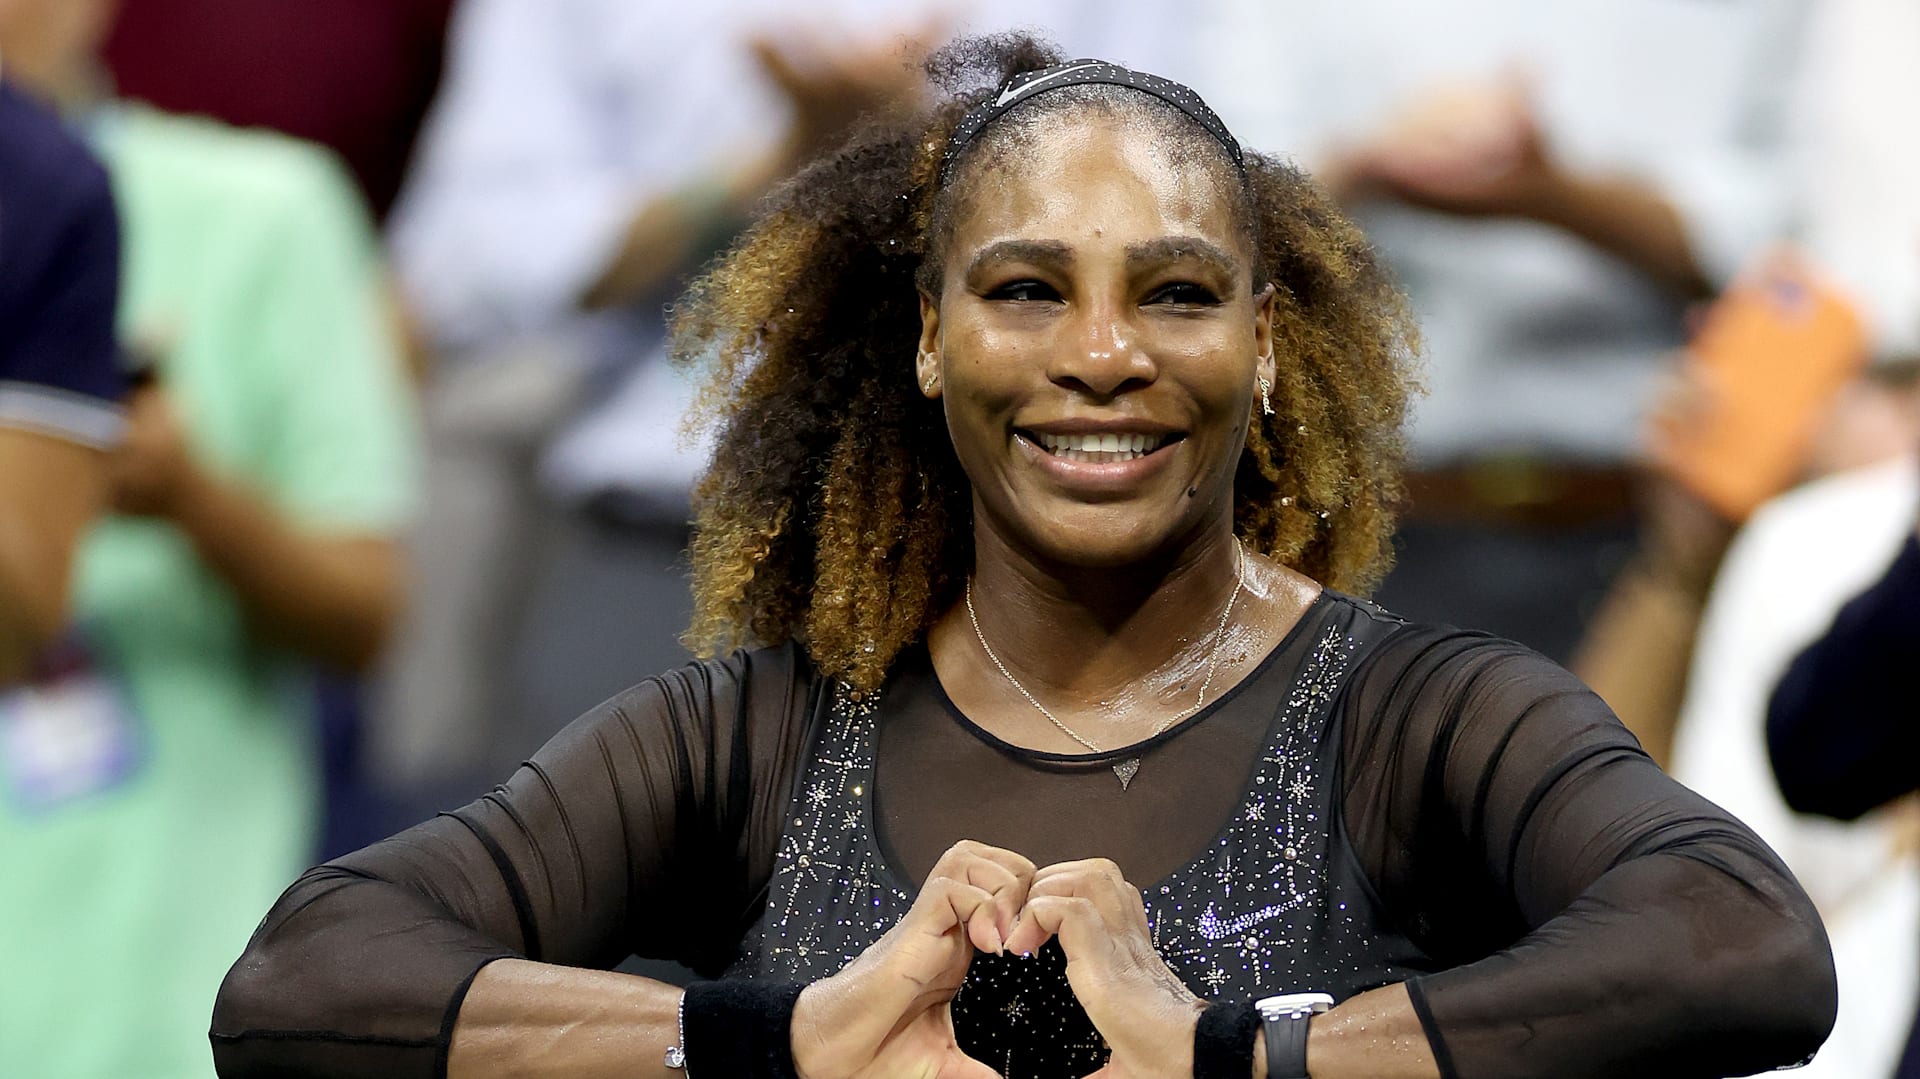 Serena Williams first athlete to receive Fashion Icon award, News briefs